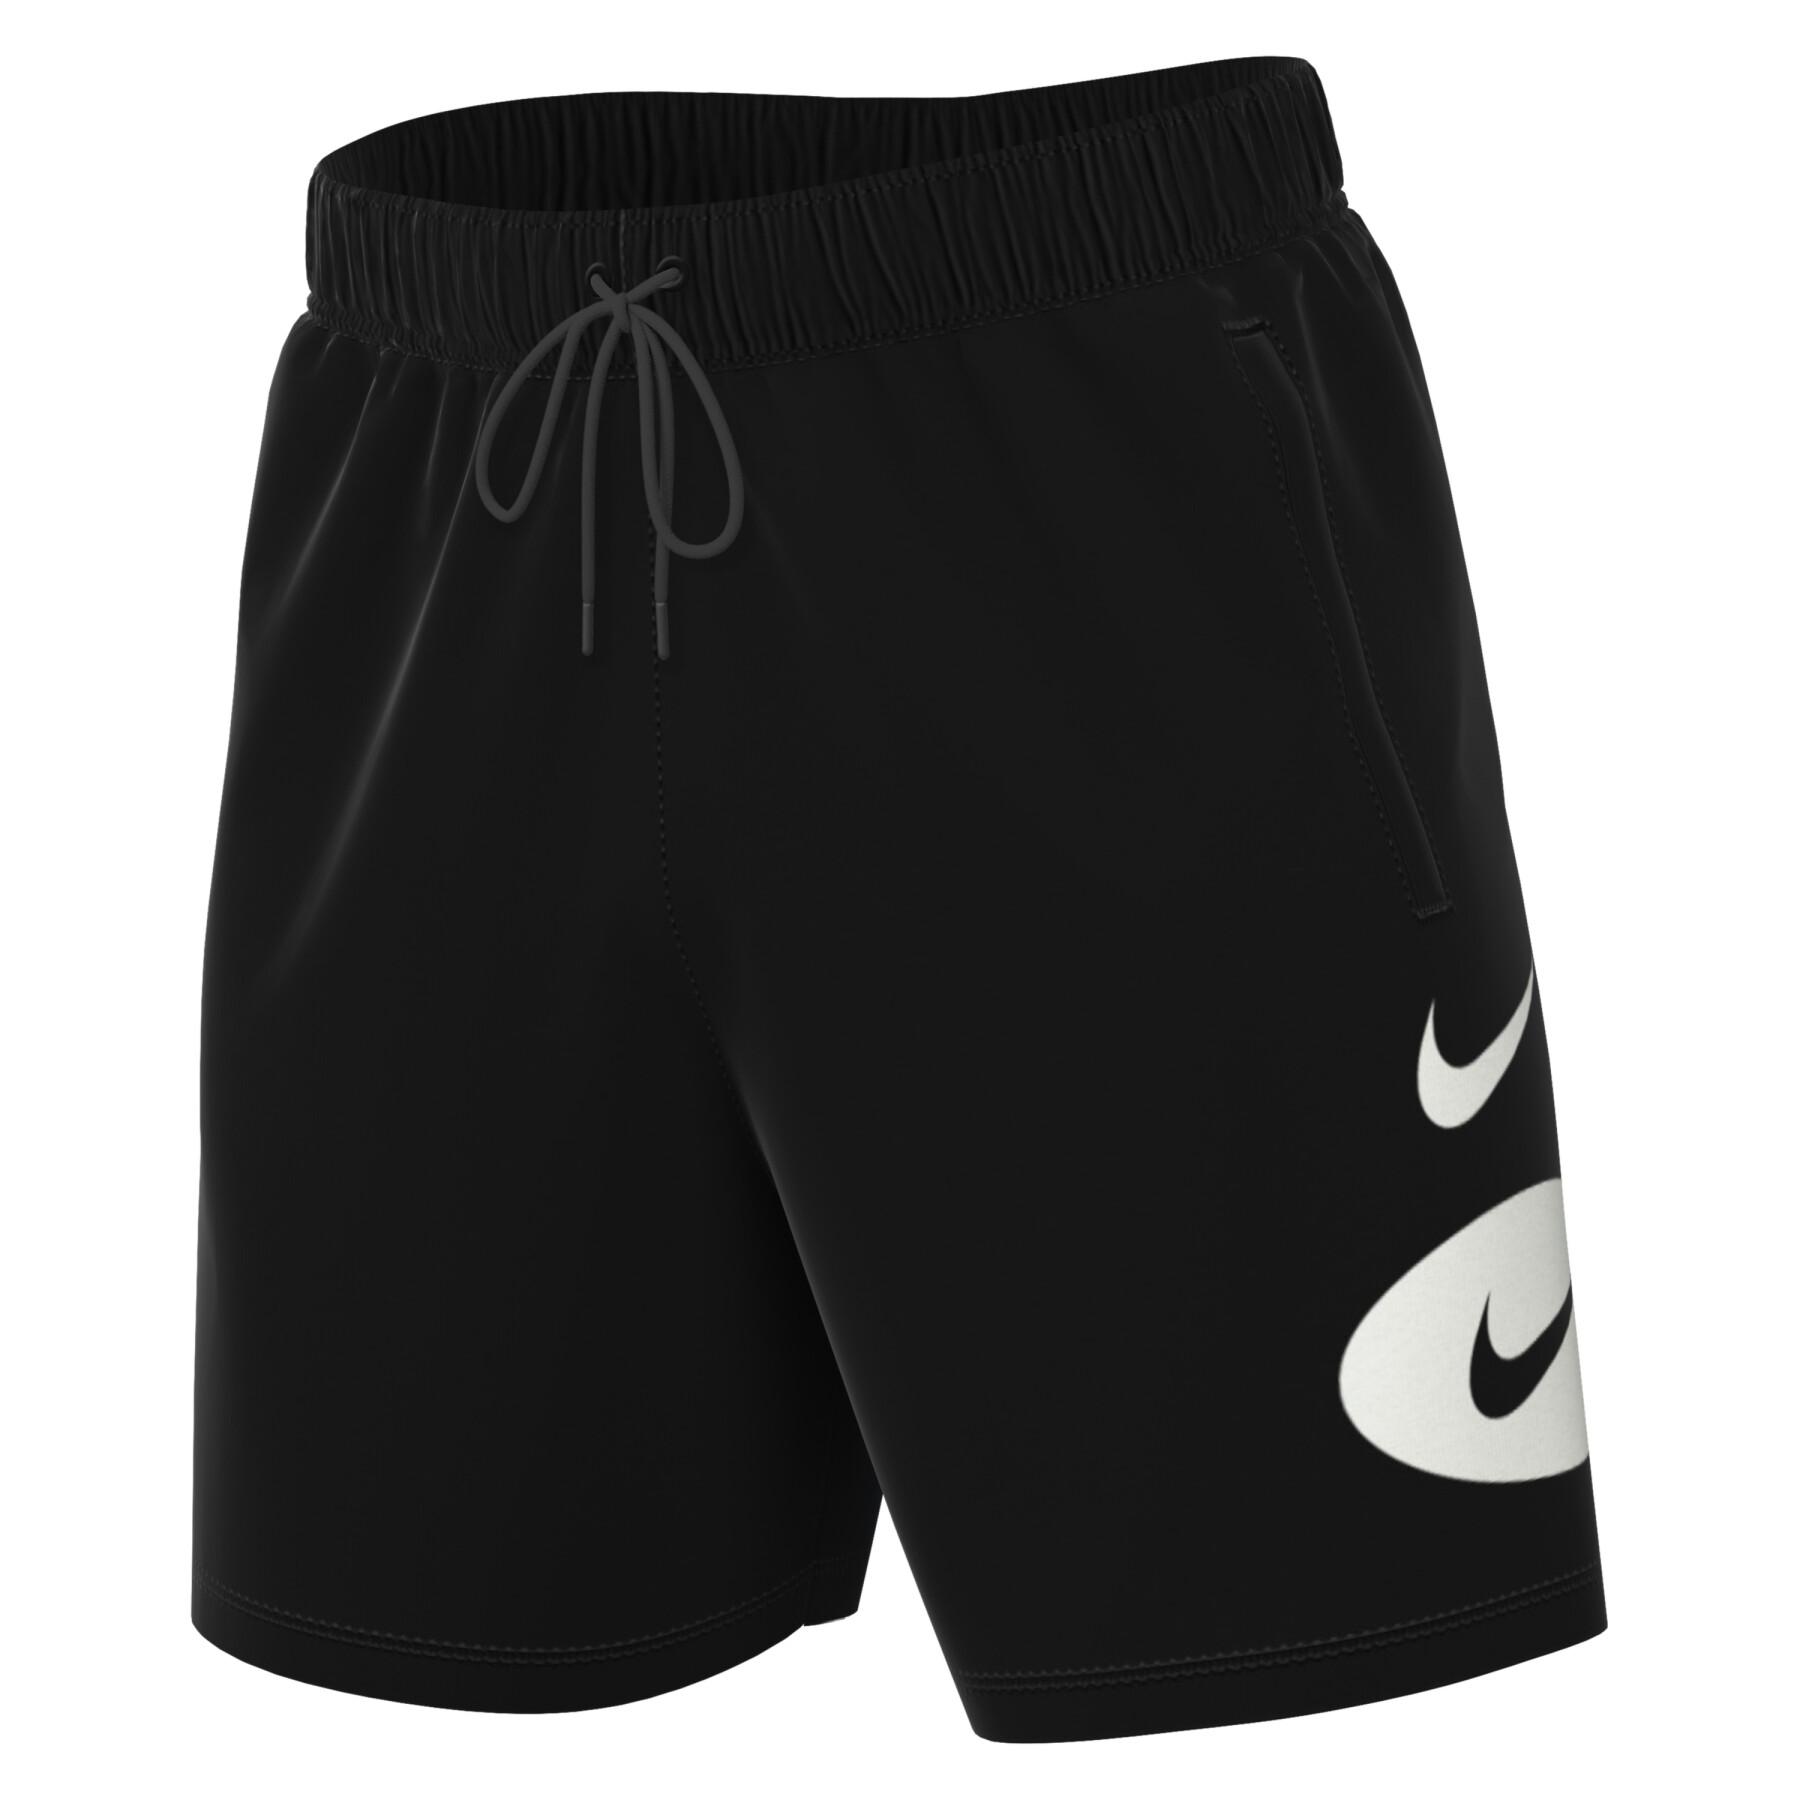 Шорты Nike Men's Shorts Swoosh - картинка